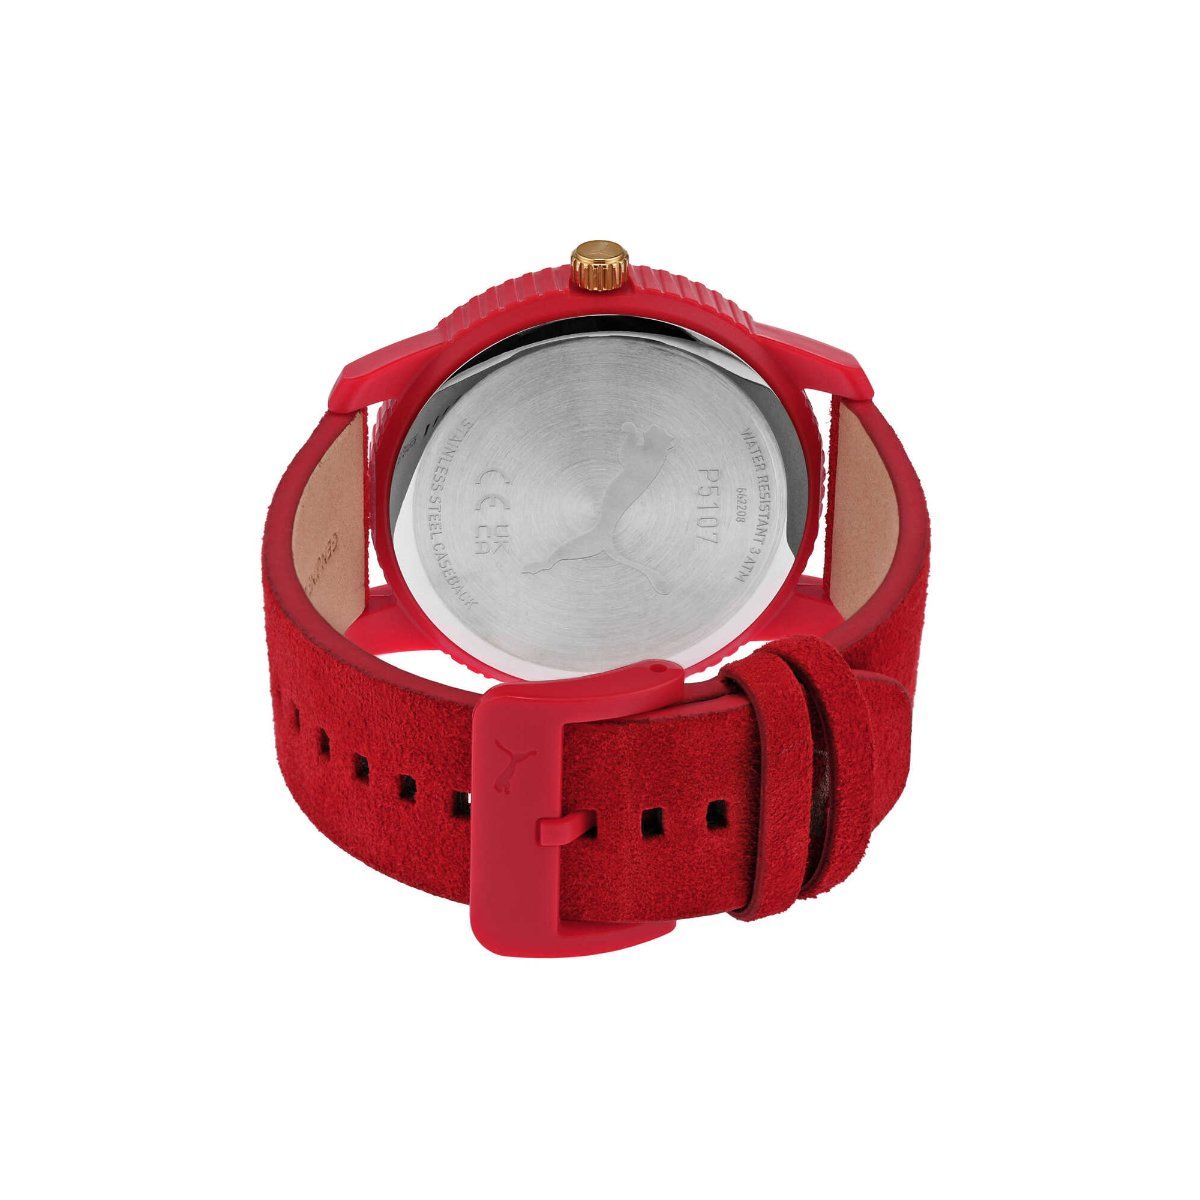 Puma Ultrafresh Red Watch P5107: Buy Puma Ultrafresh Red Watch